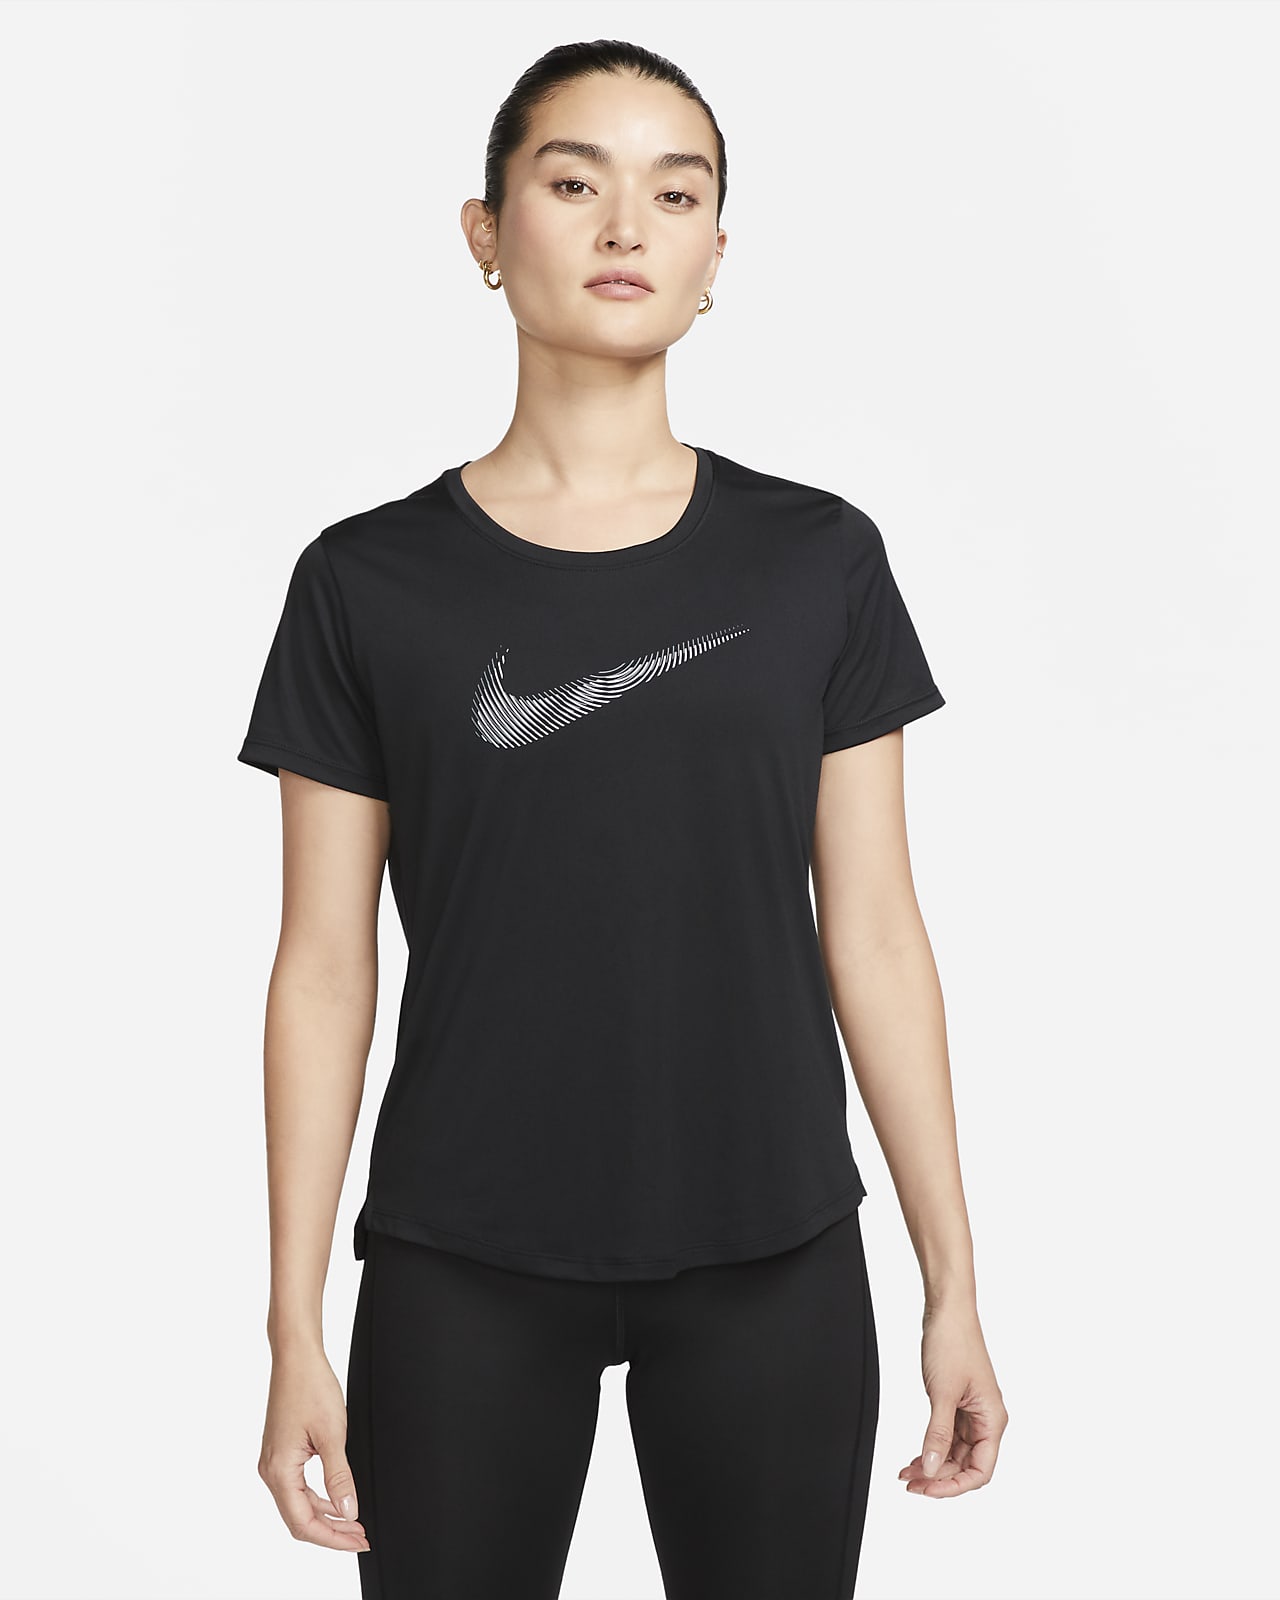 Nike Dri-FIT Swoosh Women's Short-Sleeve Running Top